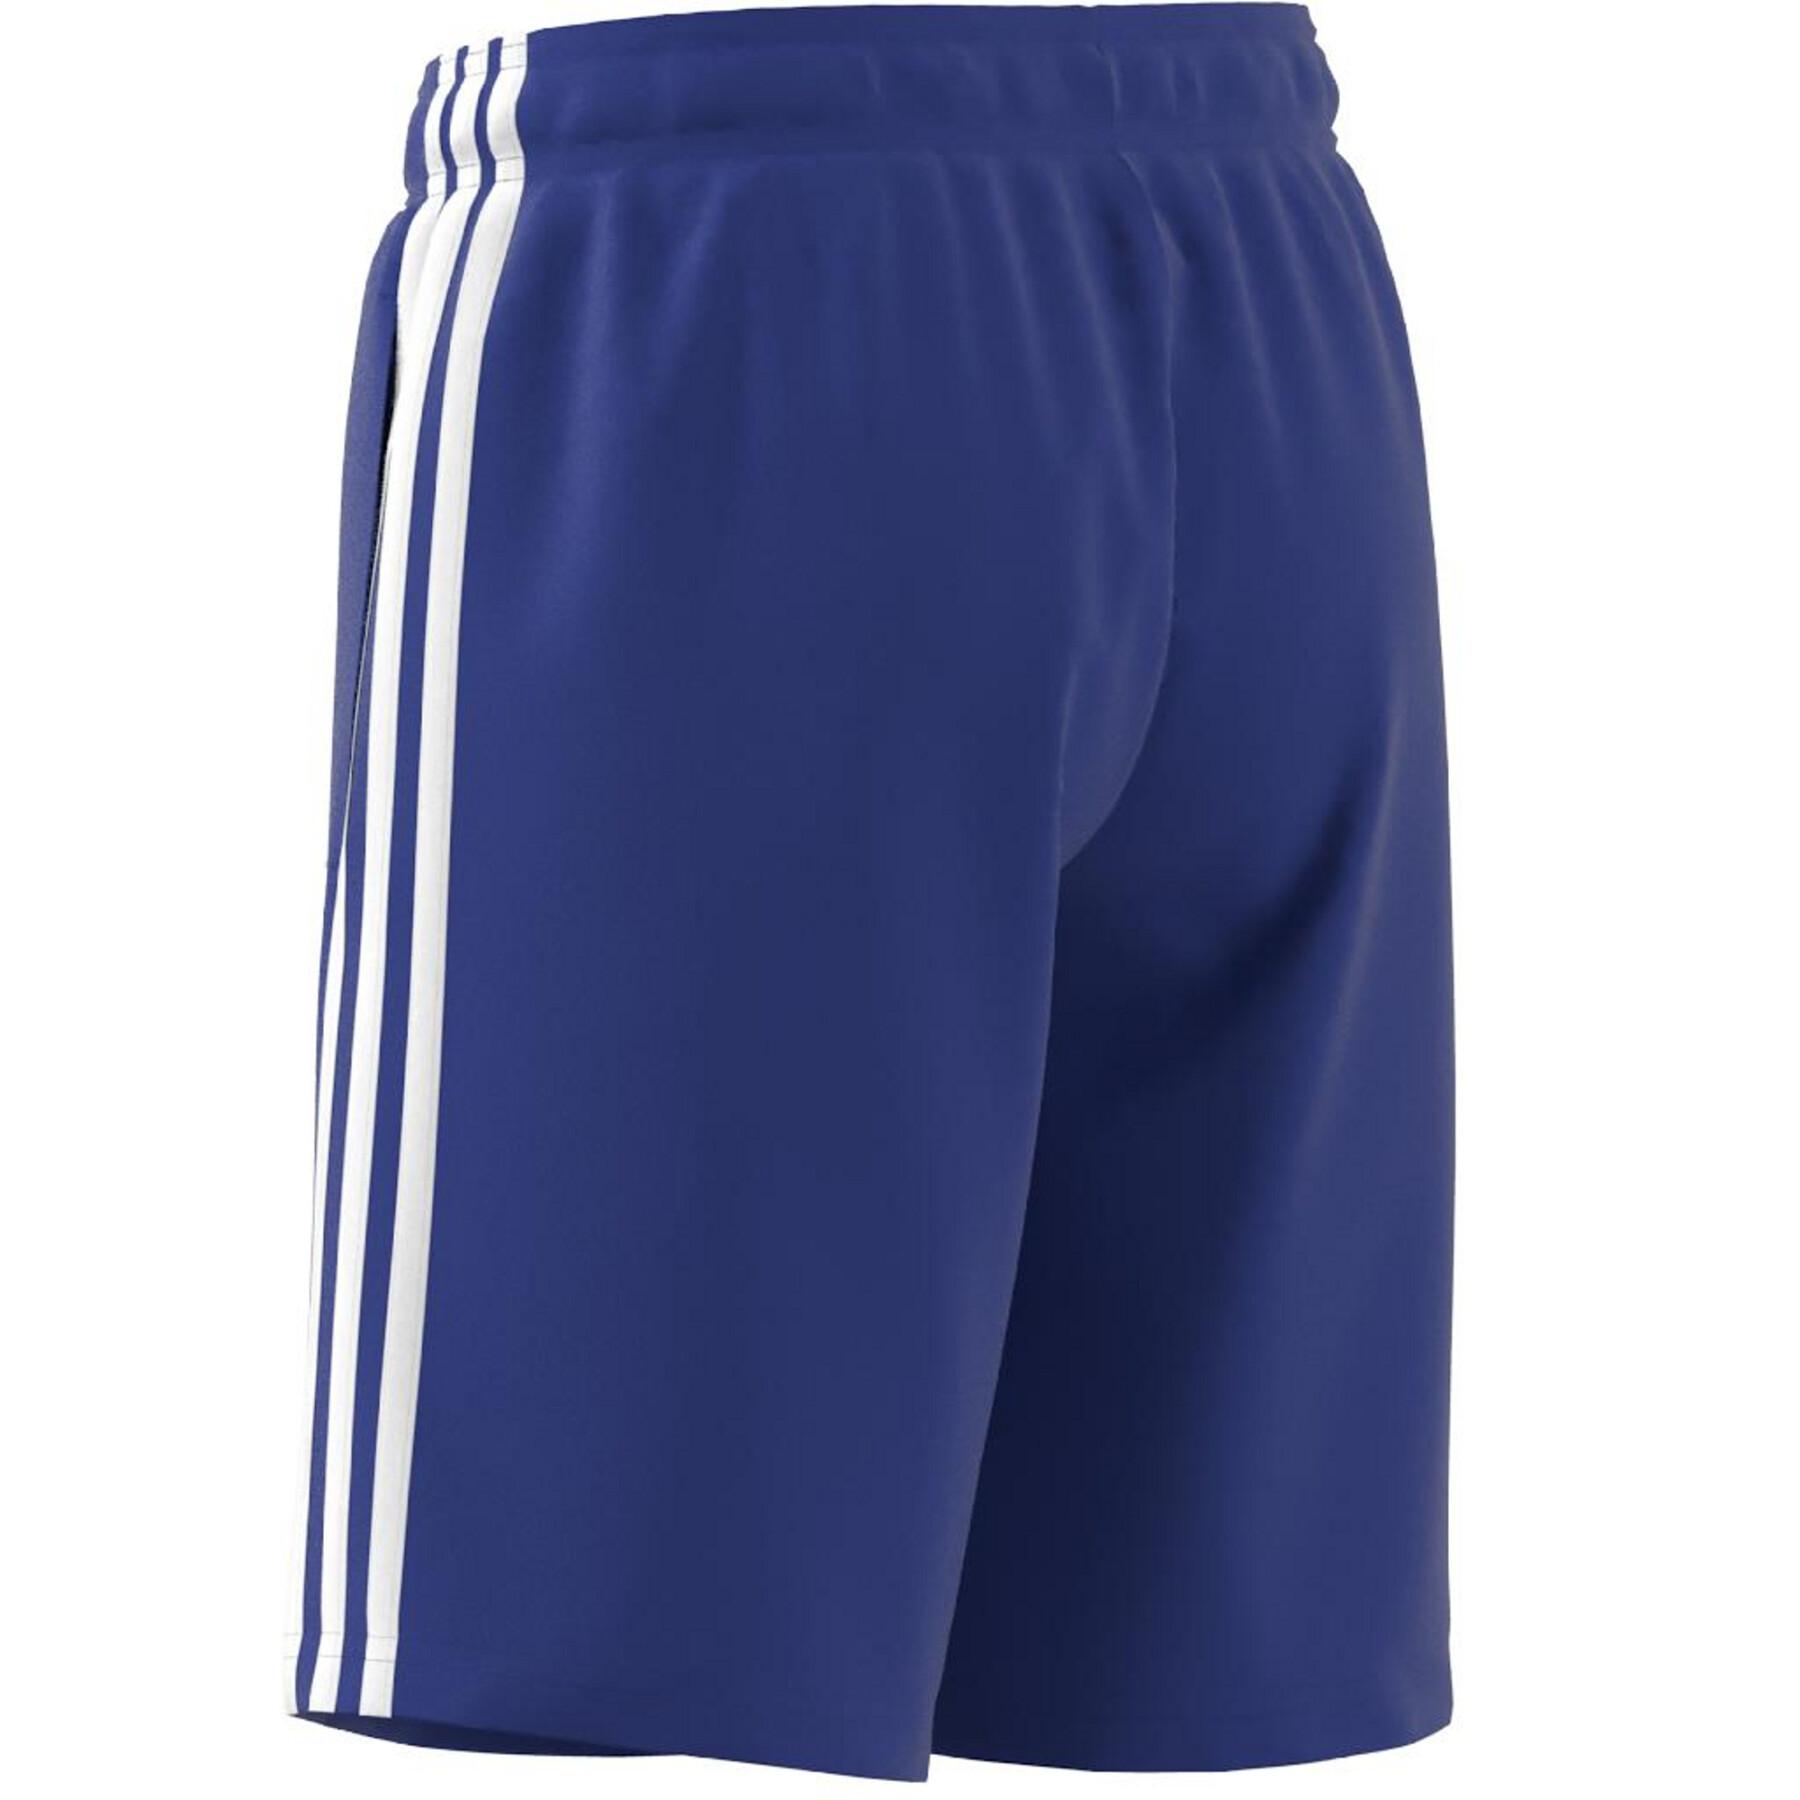 Kinder shorts adidas Essentials 3-Stripes Chelsea